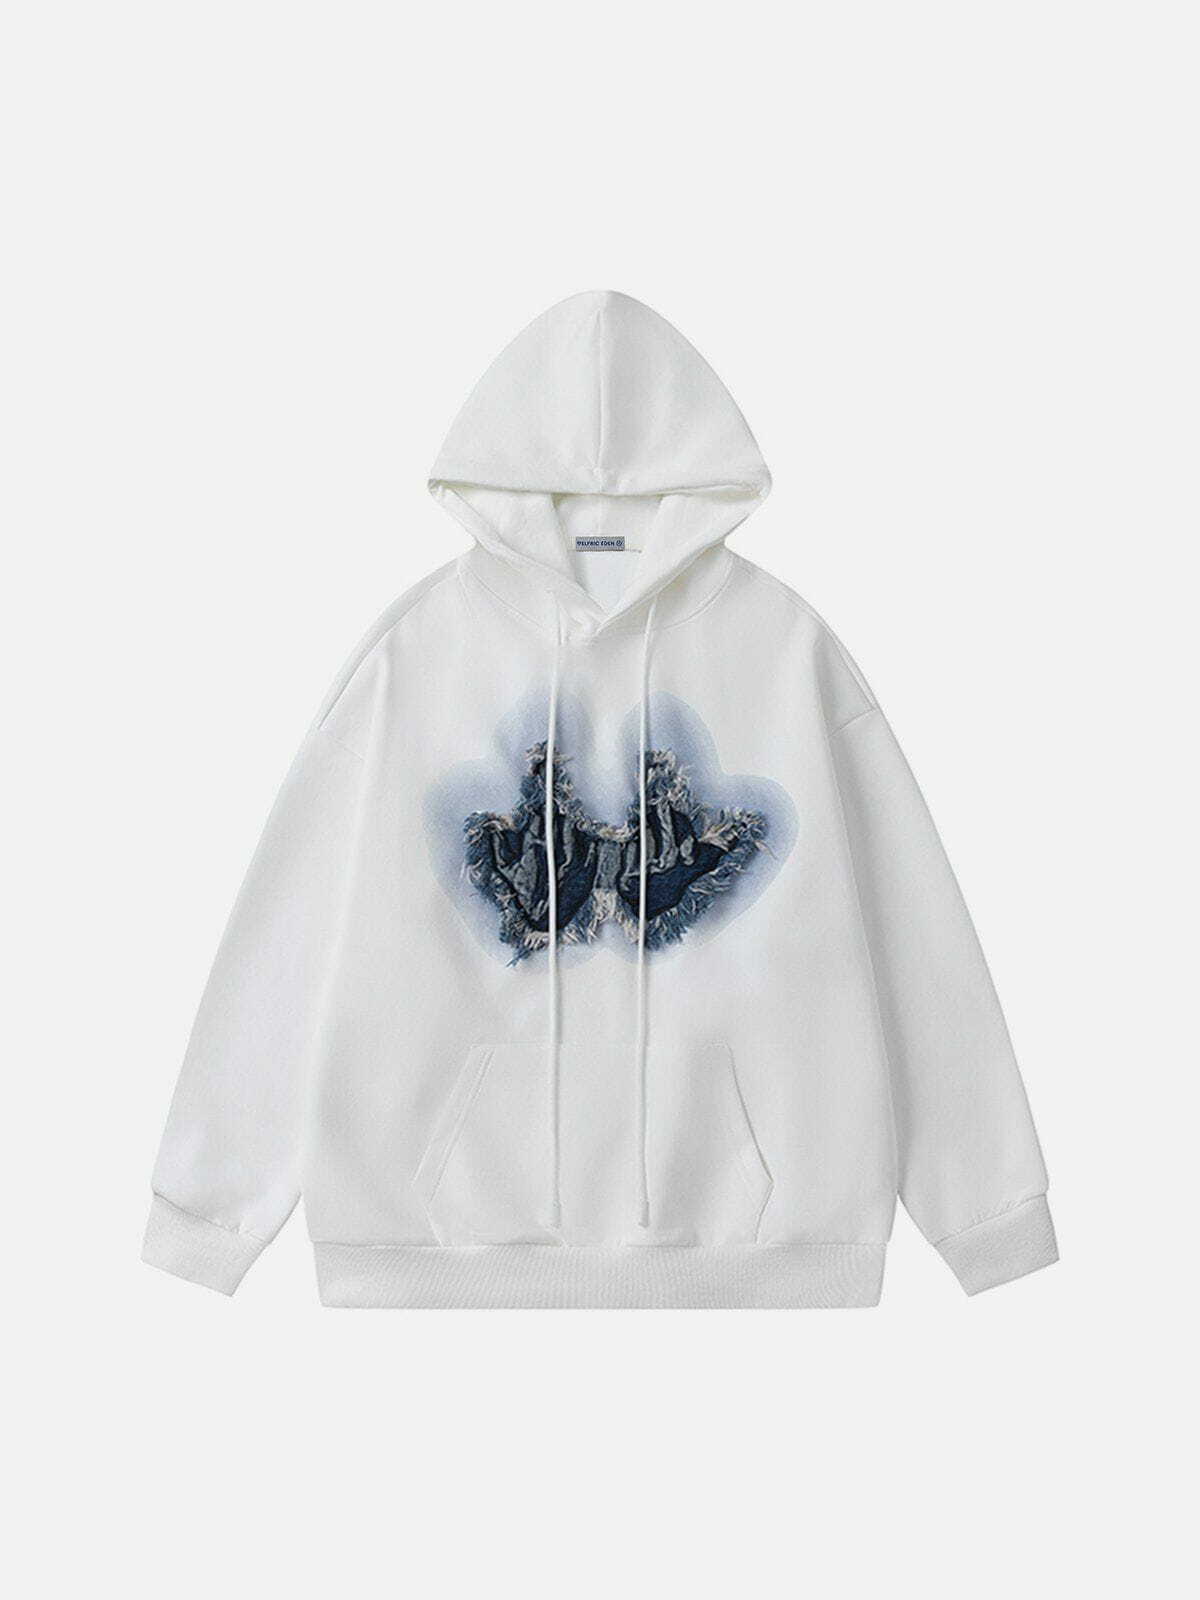 youthful fringe applique hoodie   chic urban streetwear 1425